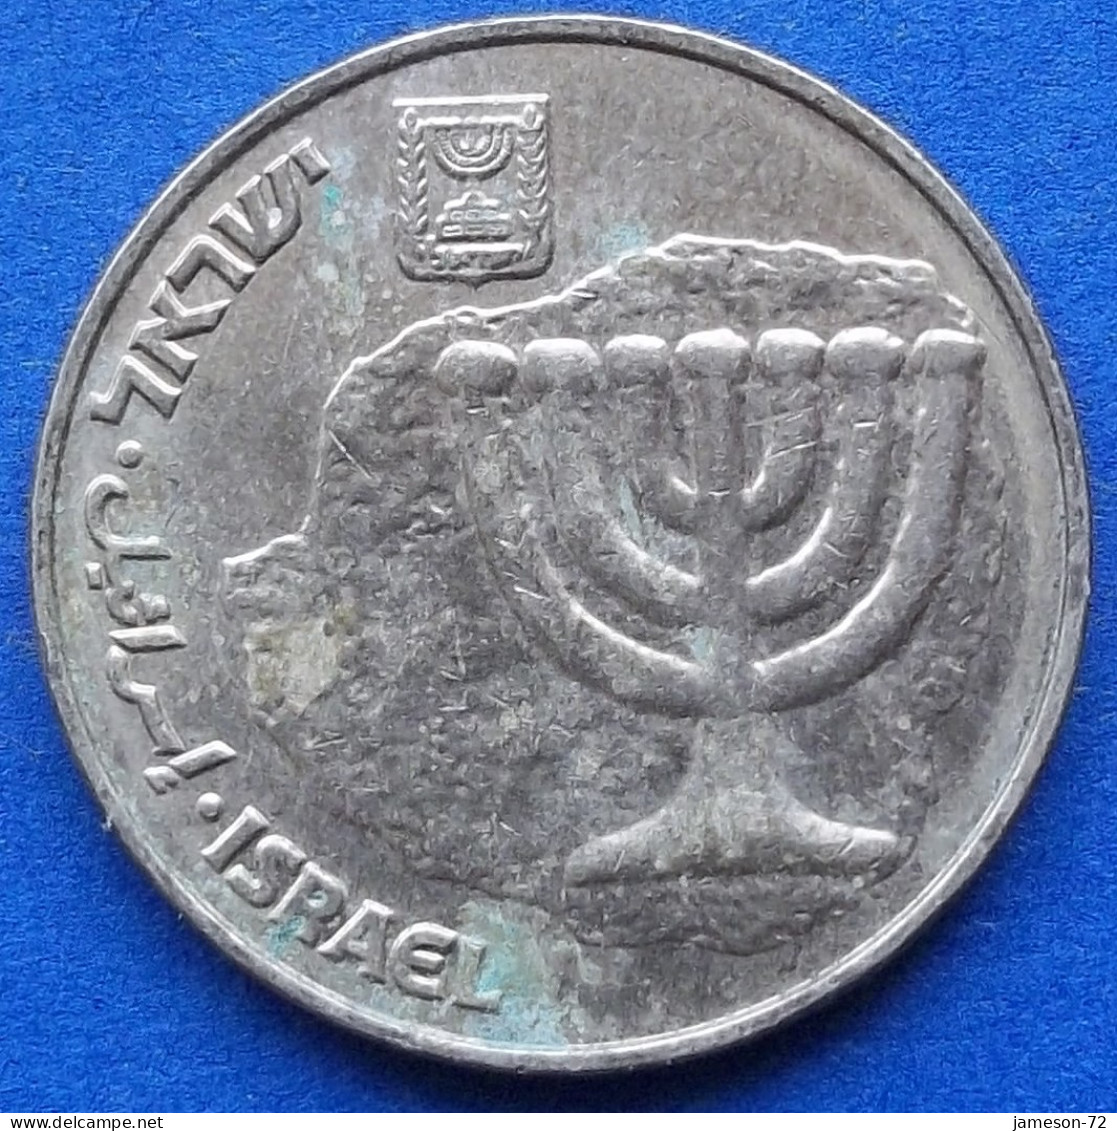 ISRAEL - 10 Agorot JE 5774 (2014AD) "Menorah" KM# 158 Monetary Reform (1985) - Edelweiss Coins - Israël